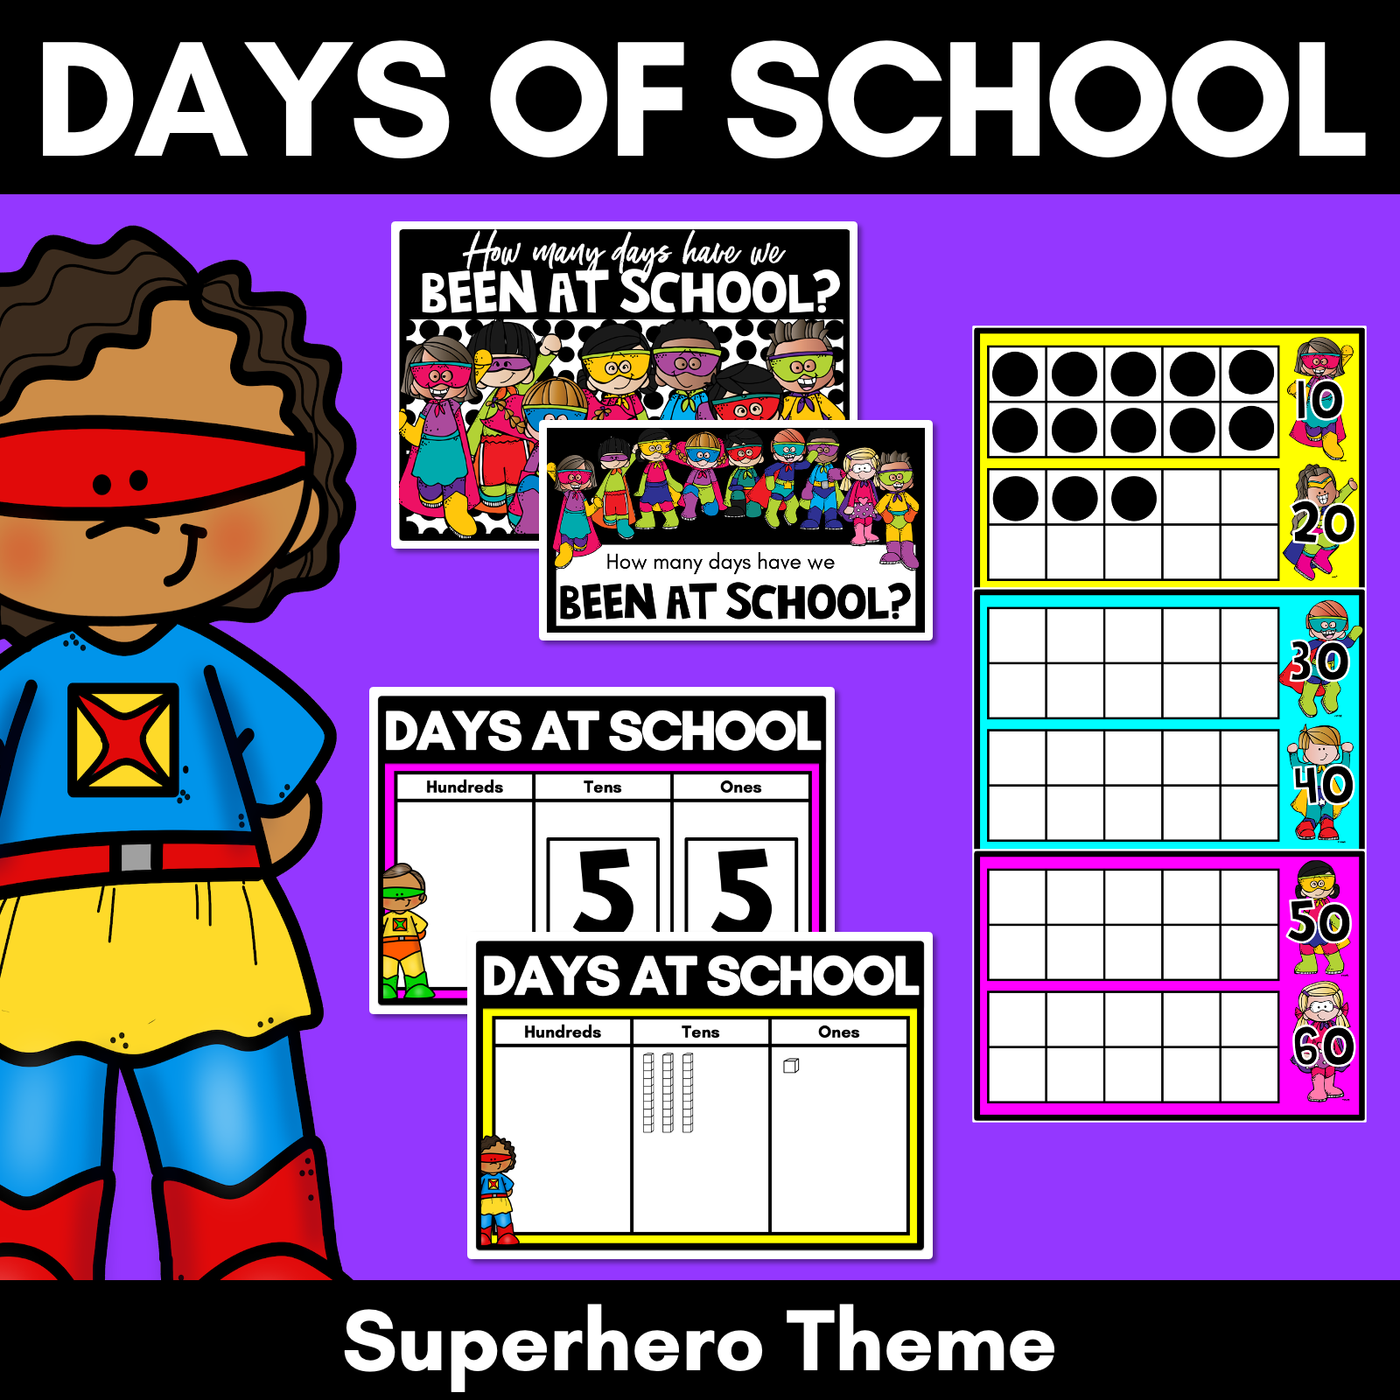 SUPERHERO THEME Days of School